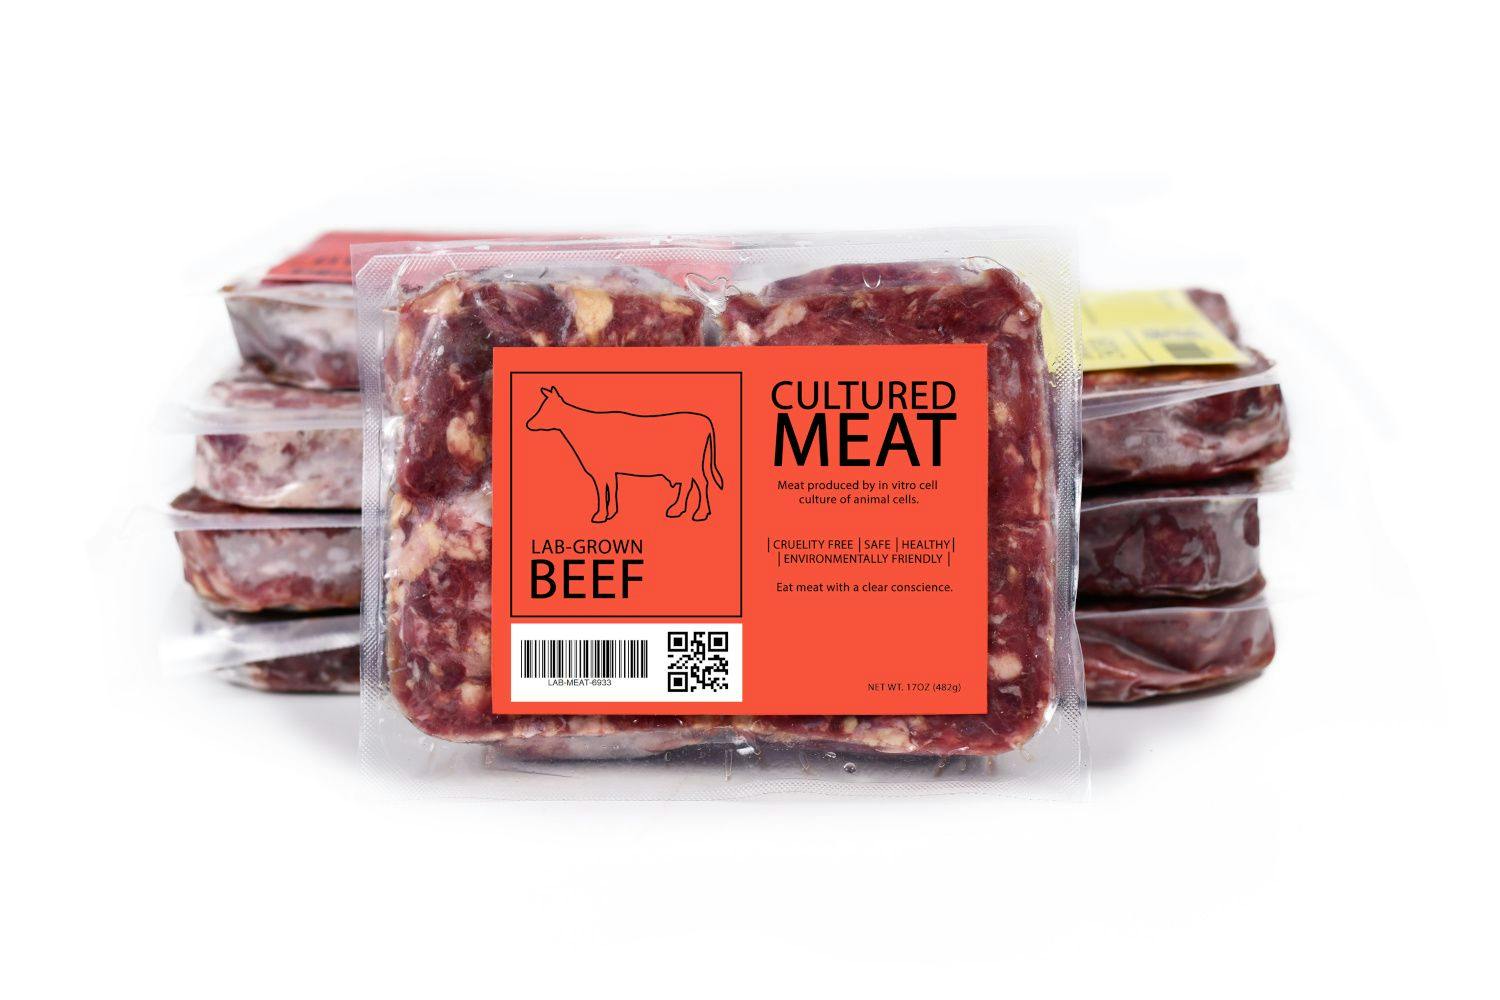 Cultured meat